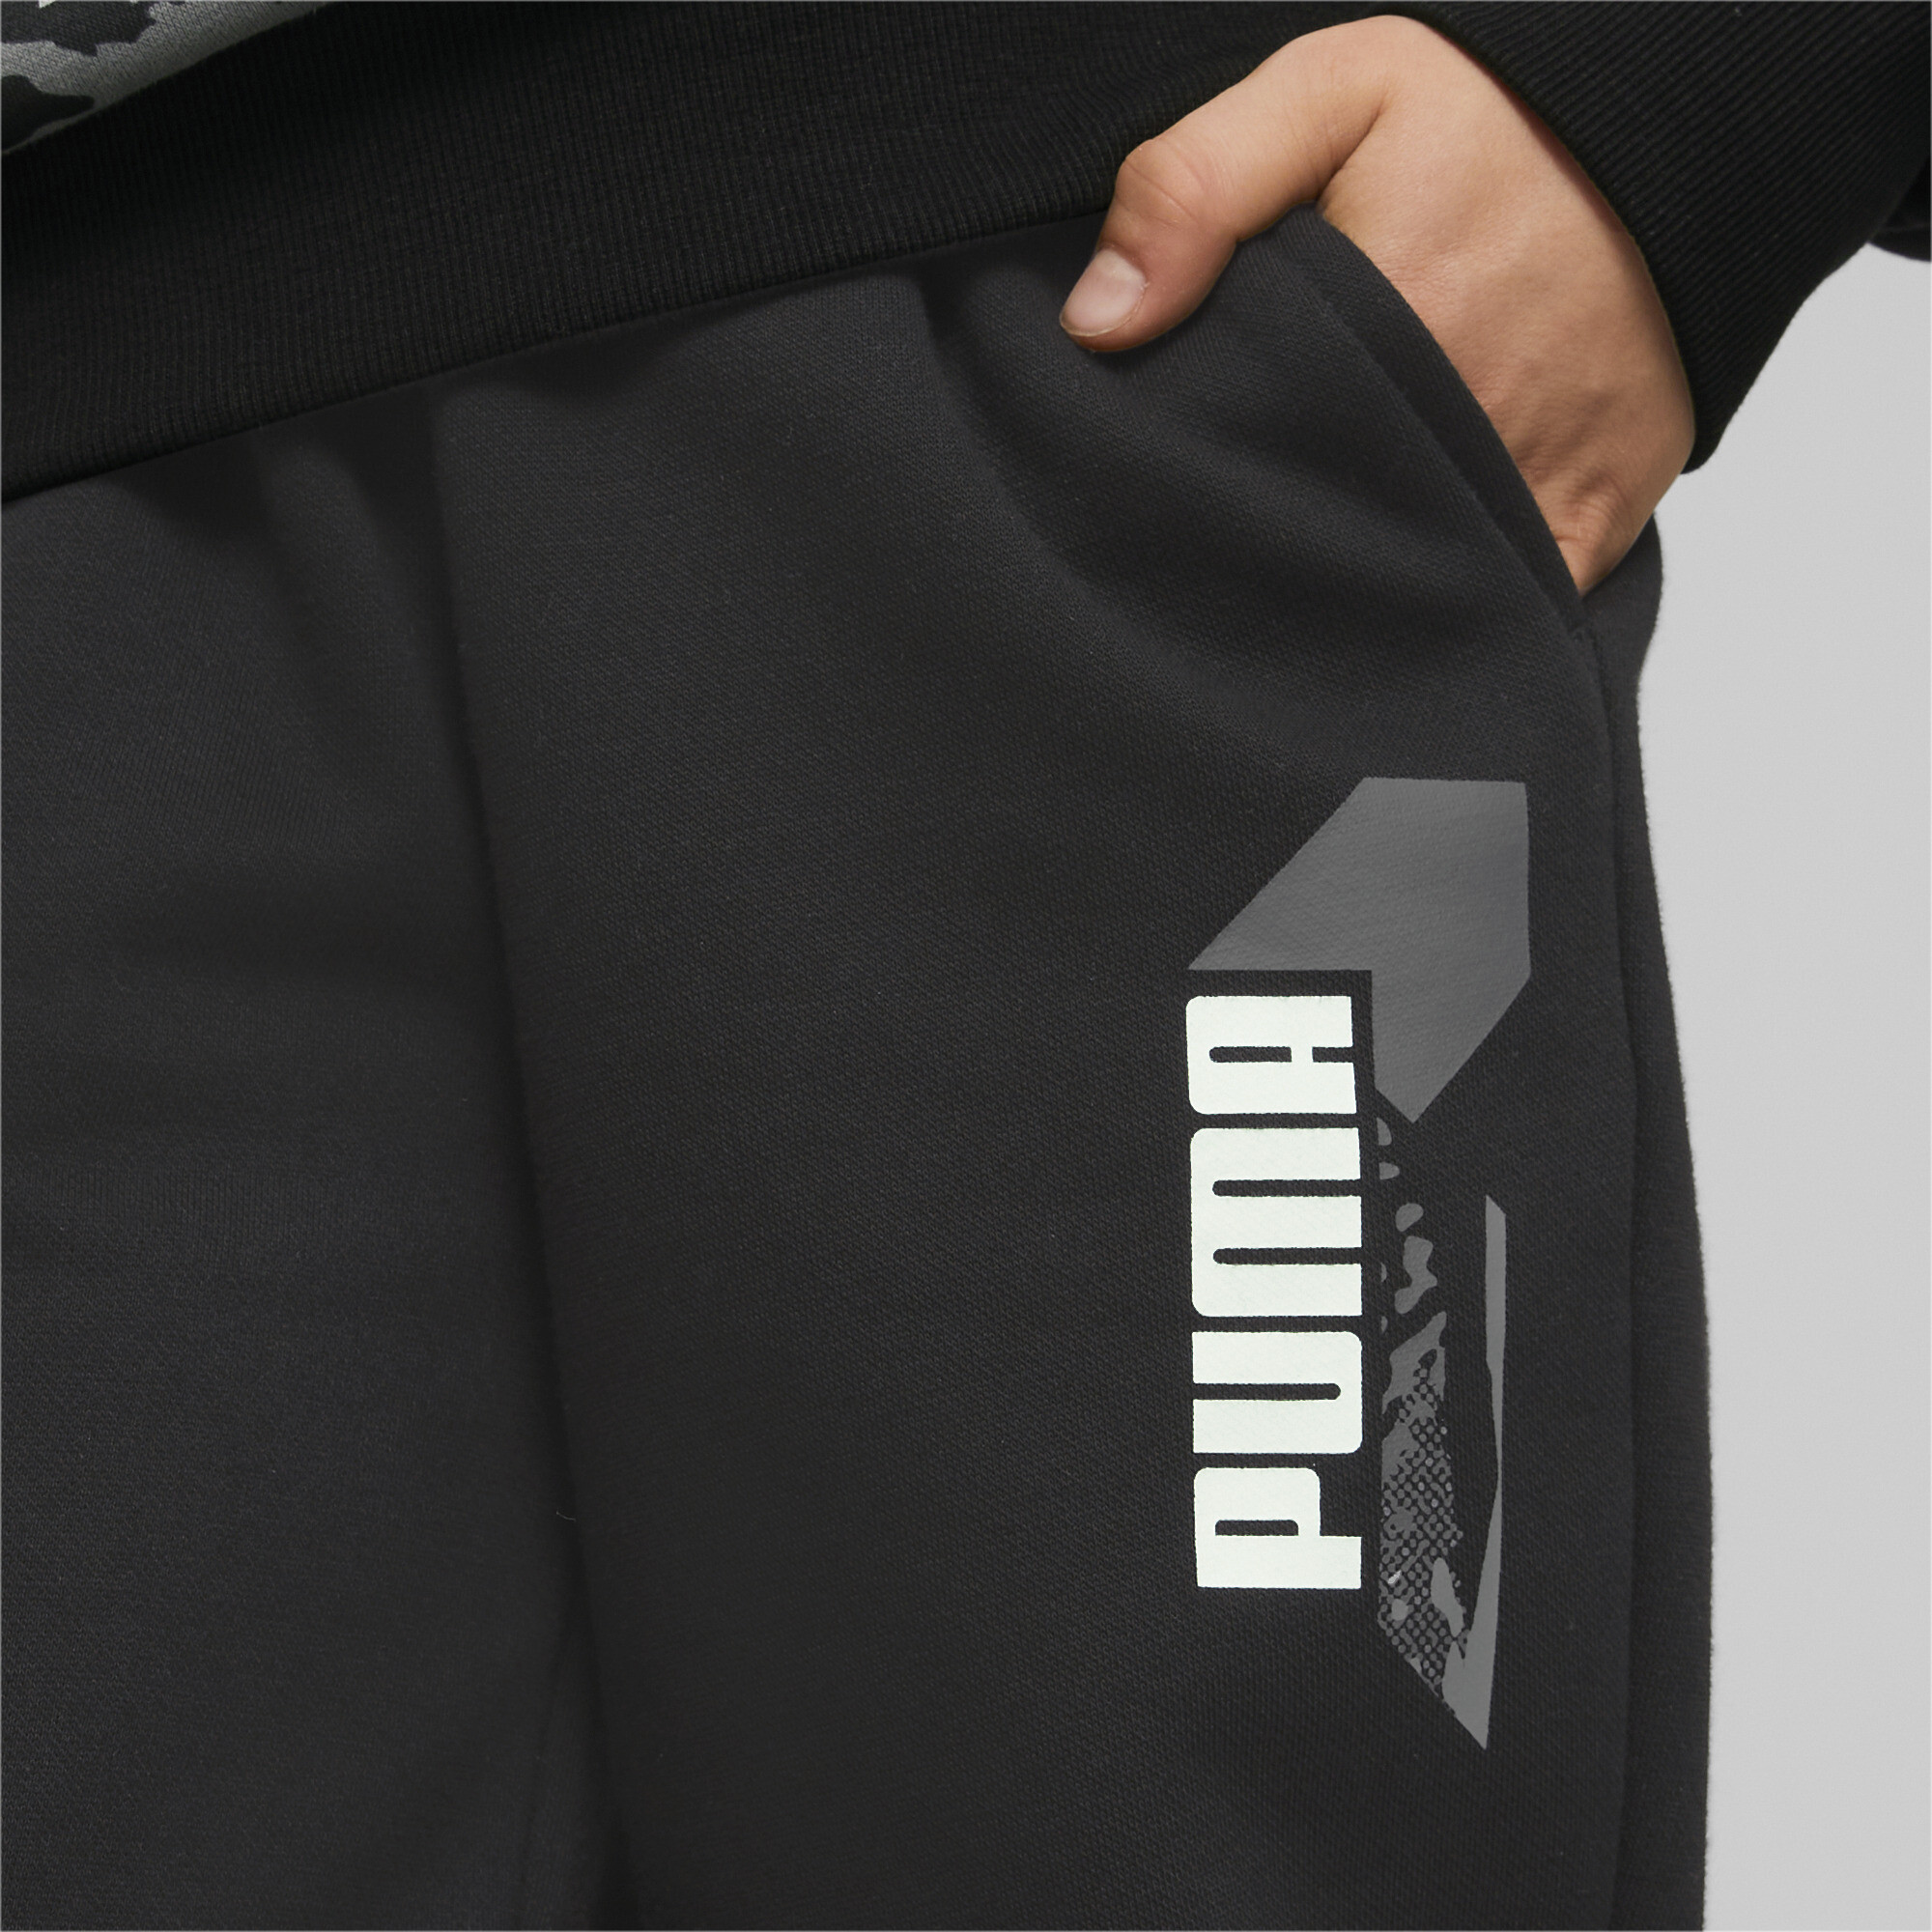 PUMA Alpha Sweatpants In Black, Size 7-8 Youth